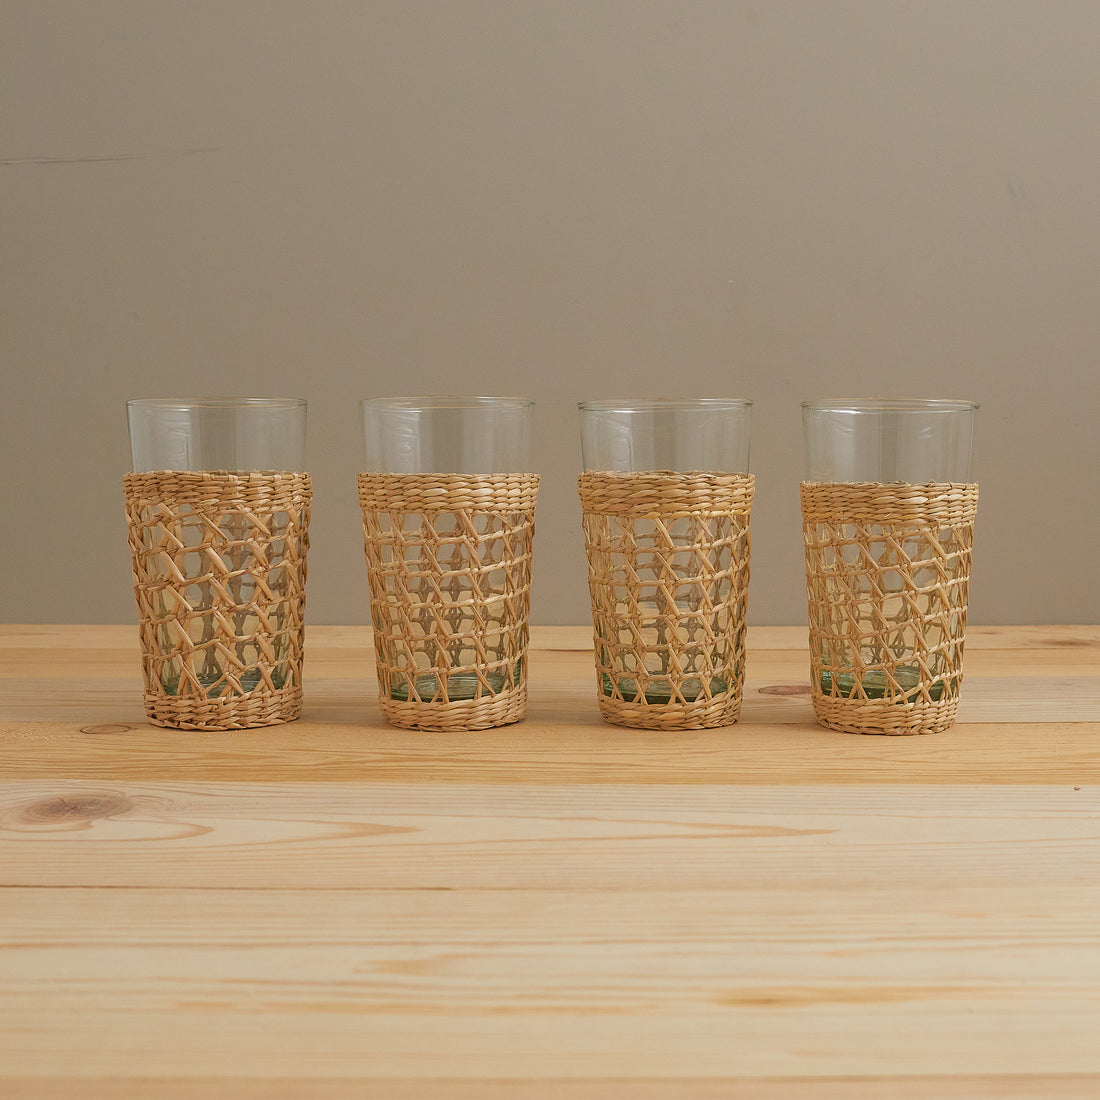 Set Of 8 Drinking Glasses Glassware Tumbler Highball Water Tall